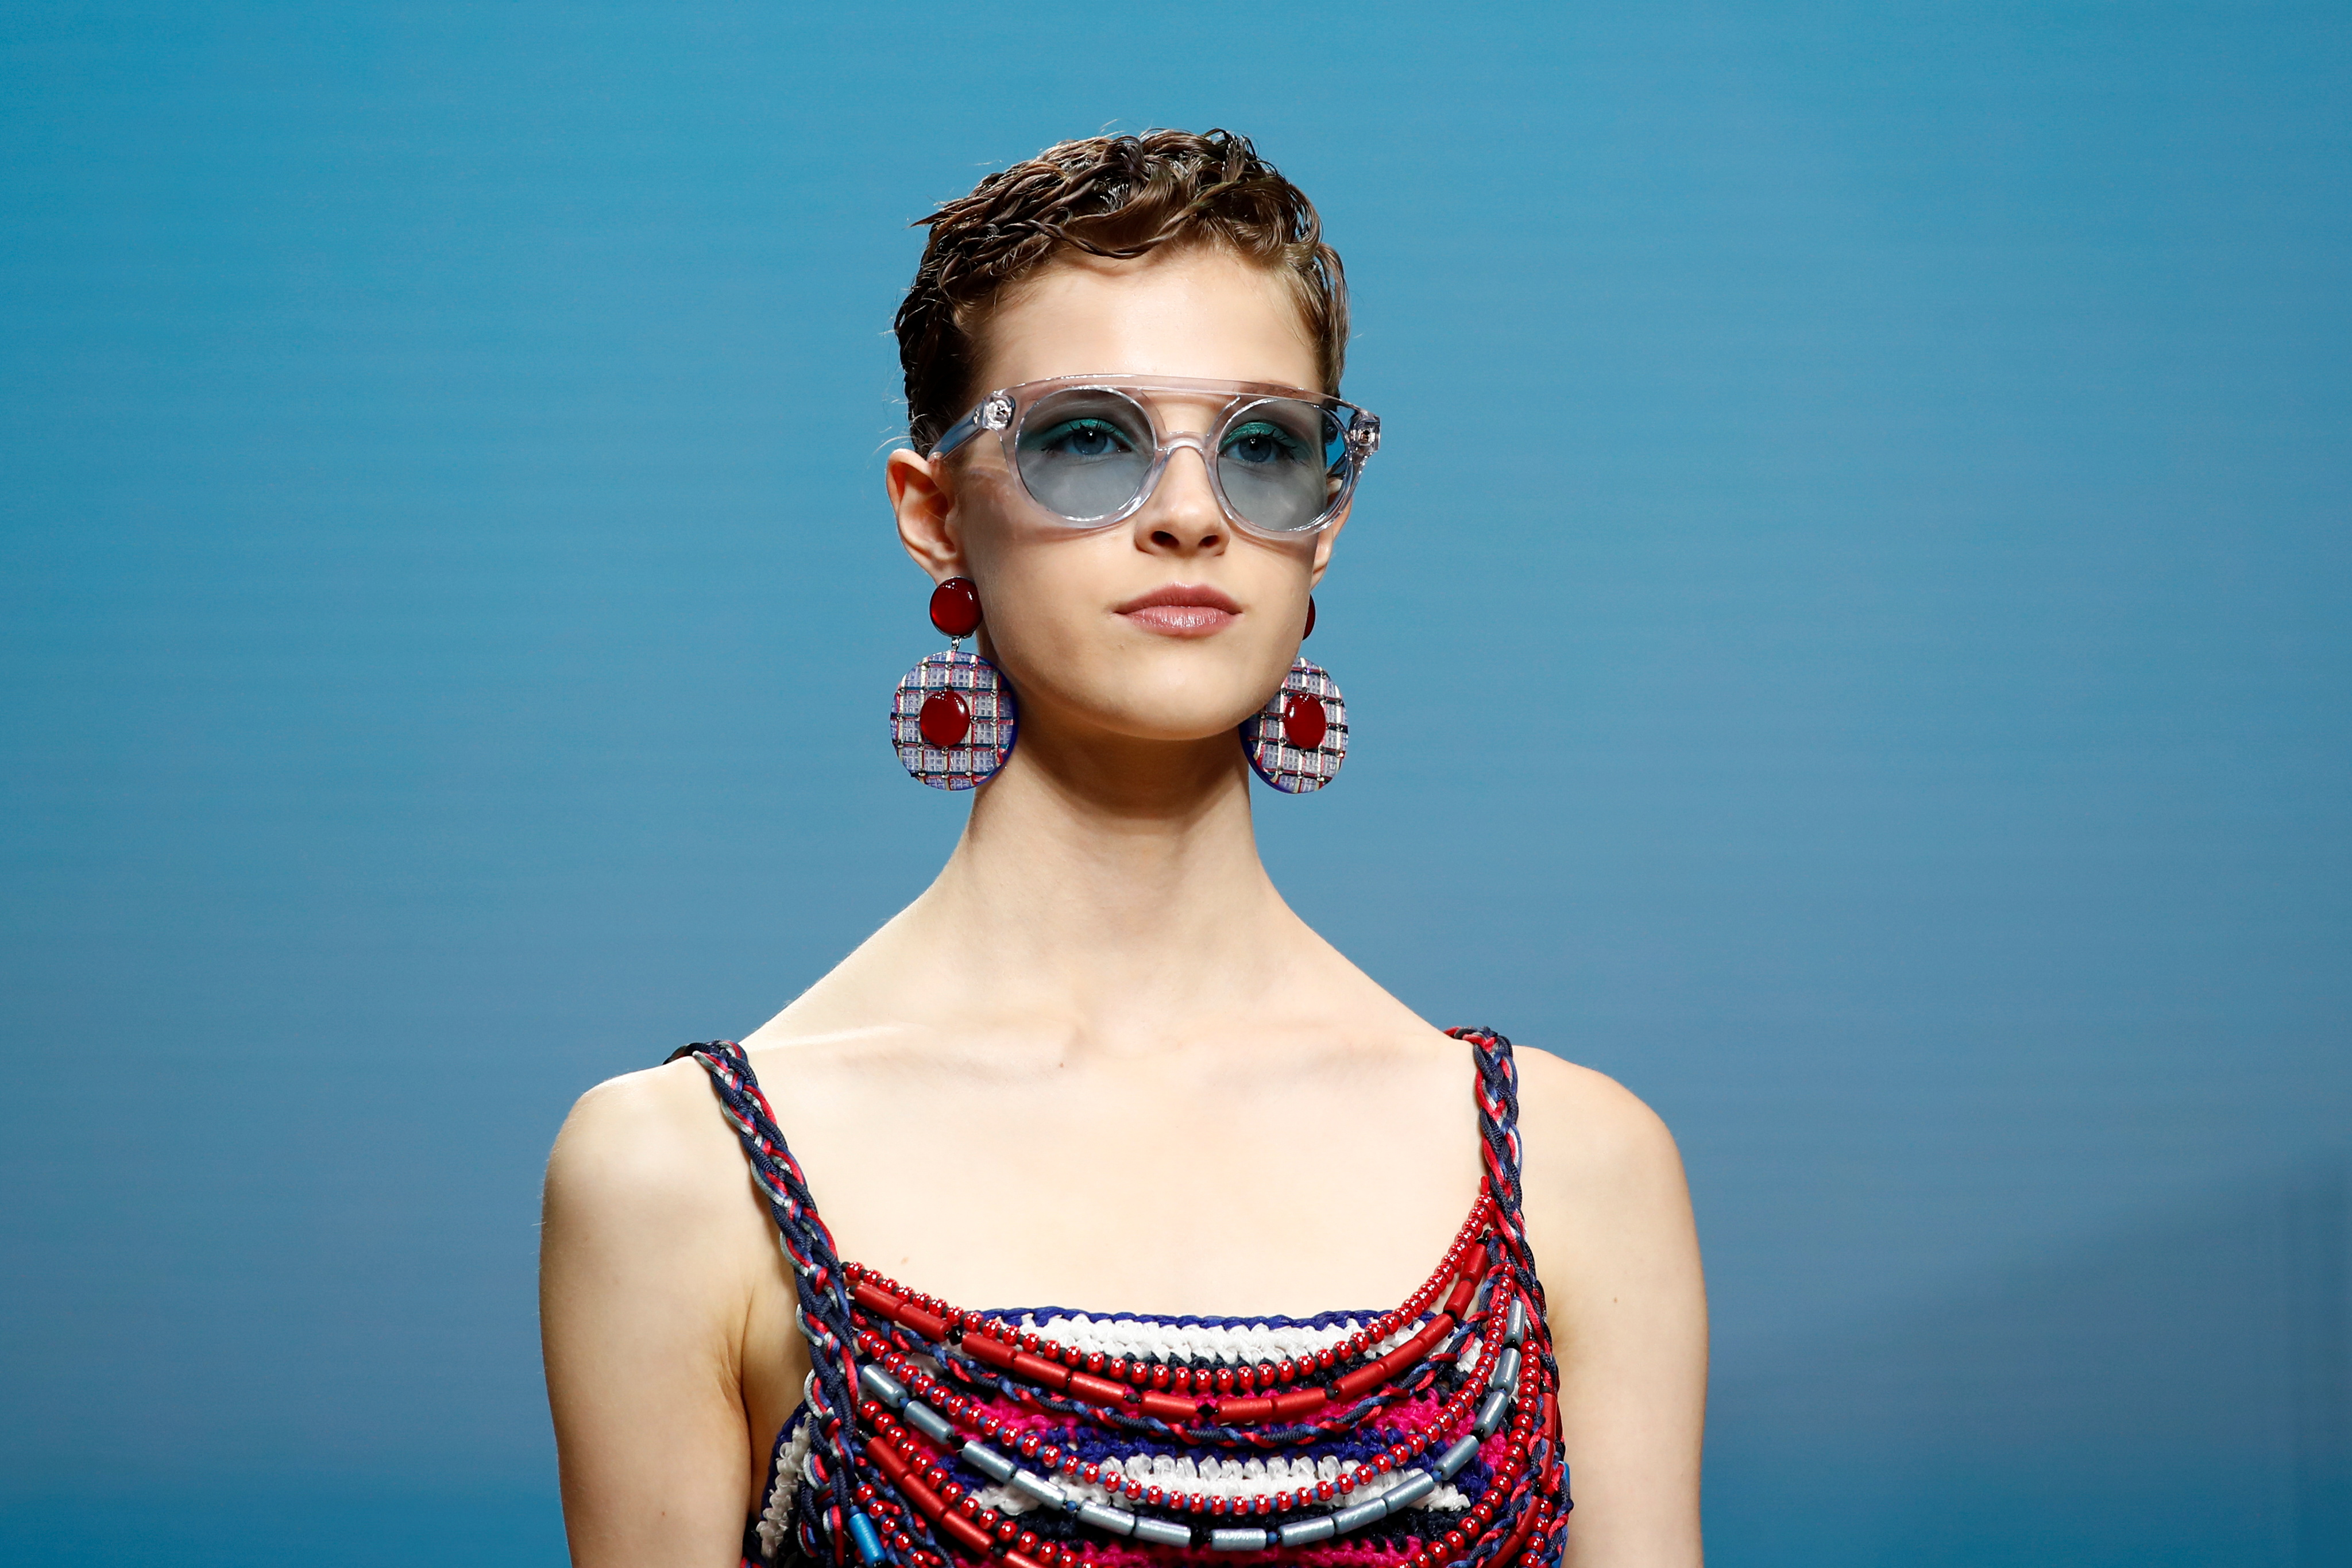 Giorgio Armani presents Spring/Summer 2022 collection during Milan Fashion Week